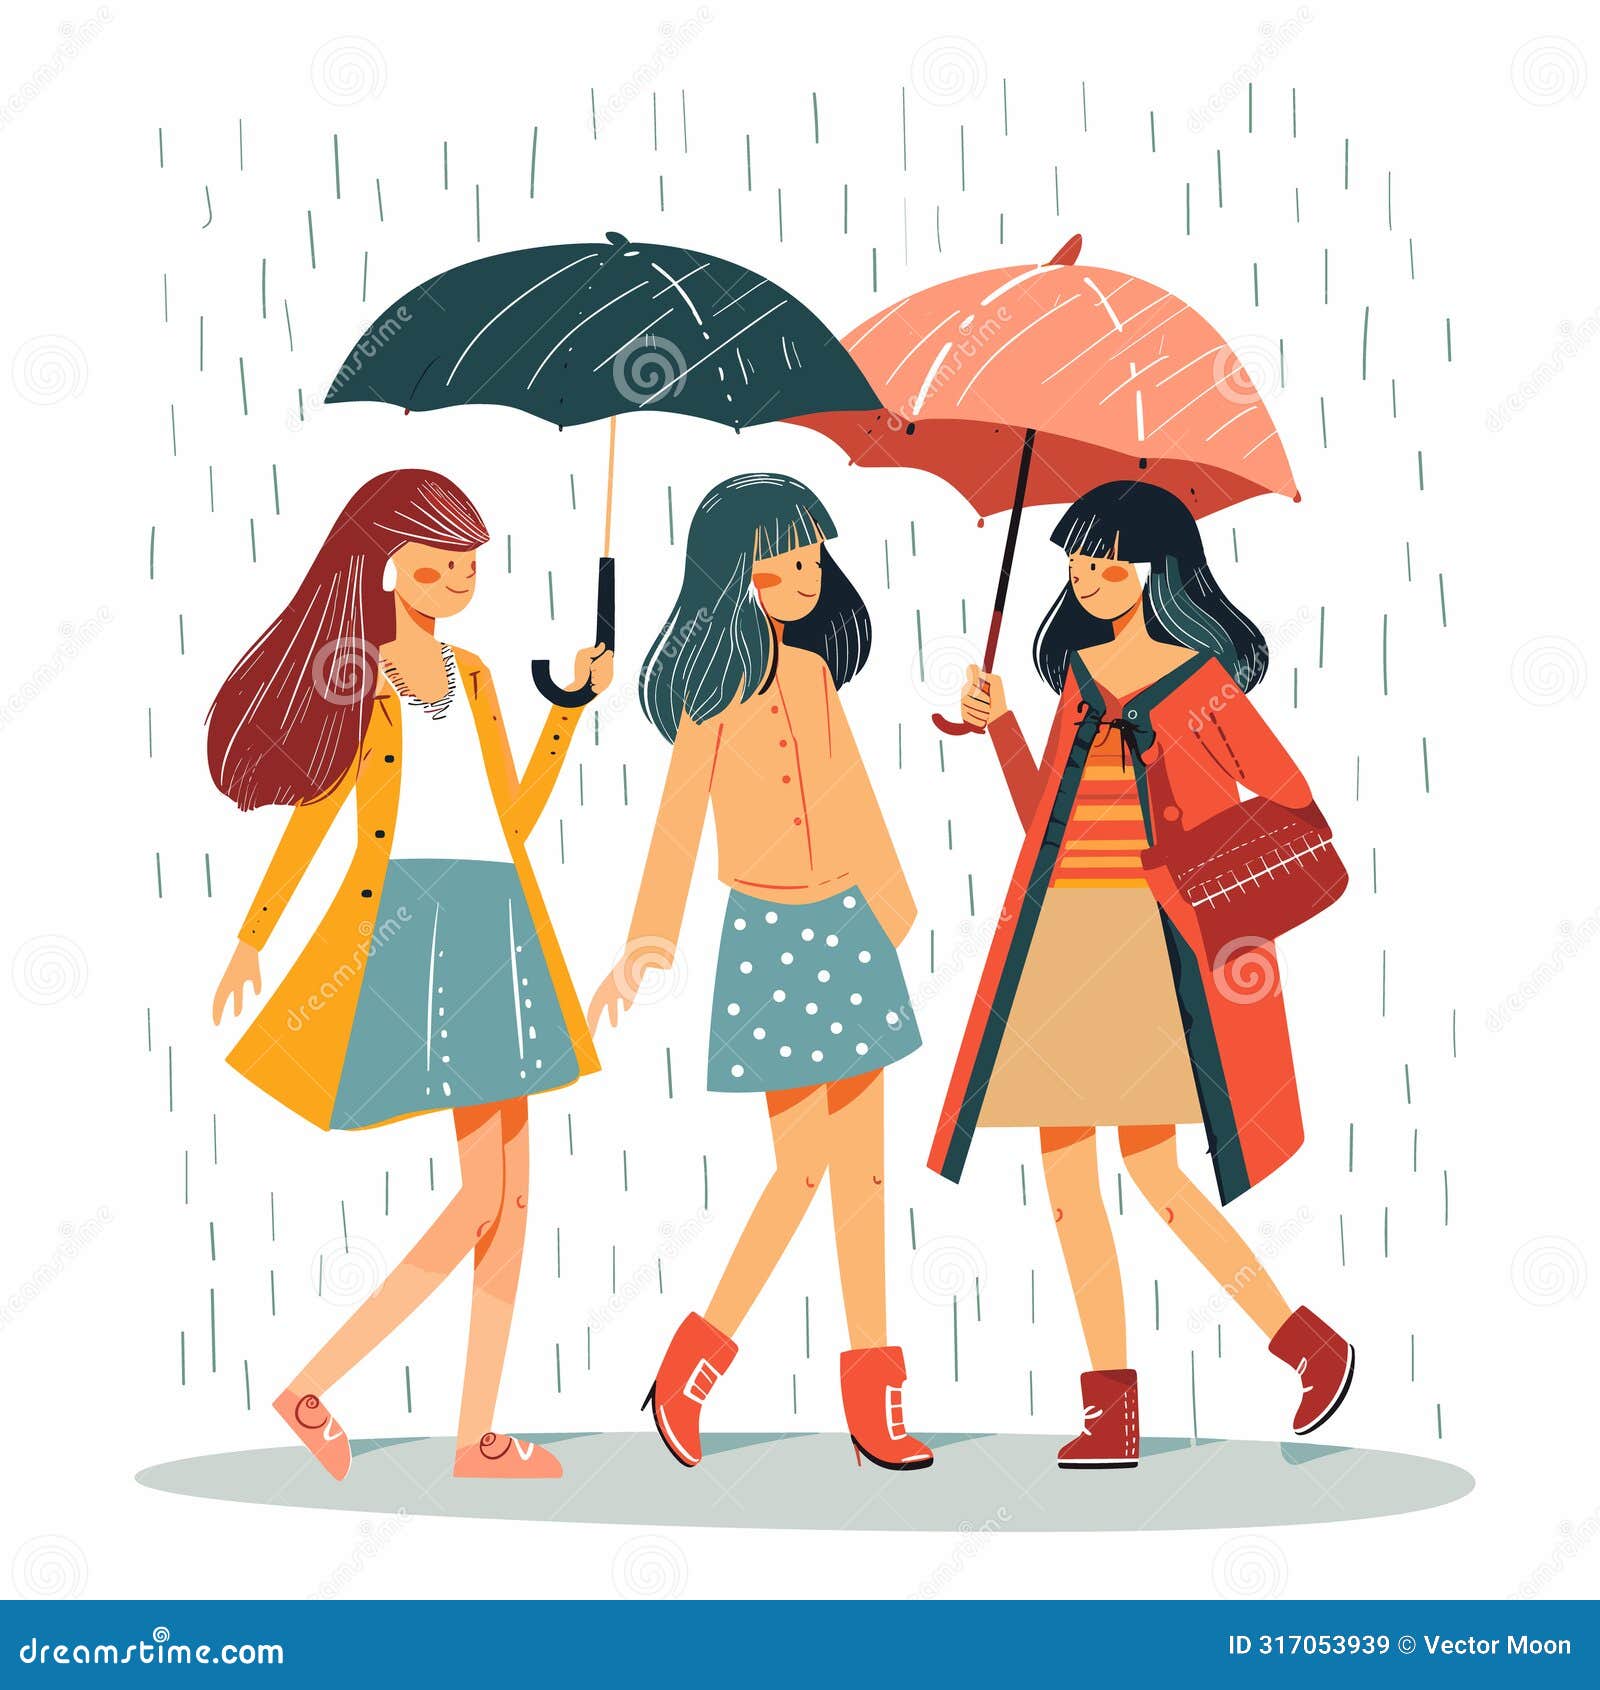 three women walking under umbrellas during rain shower, wearing coats, displaying casual fashion